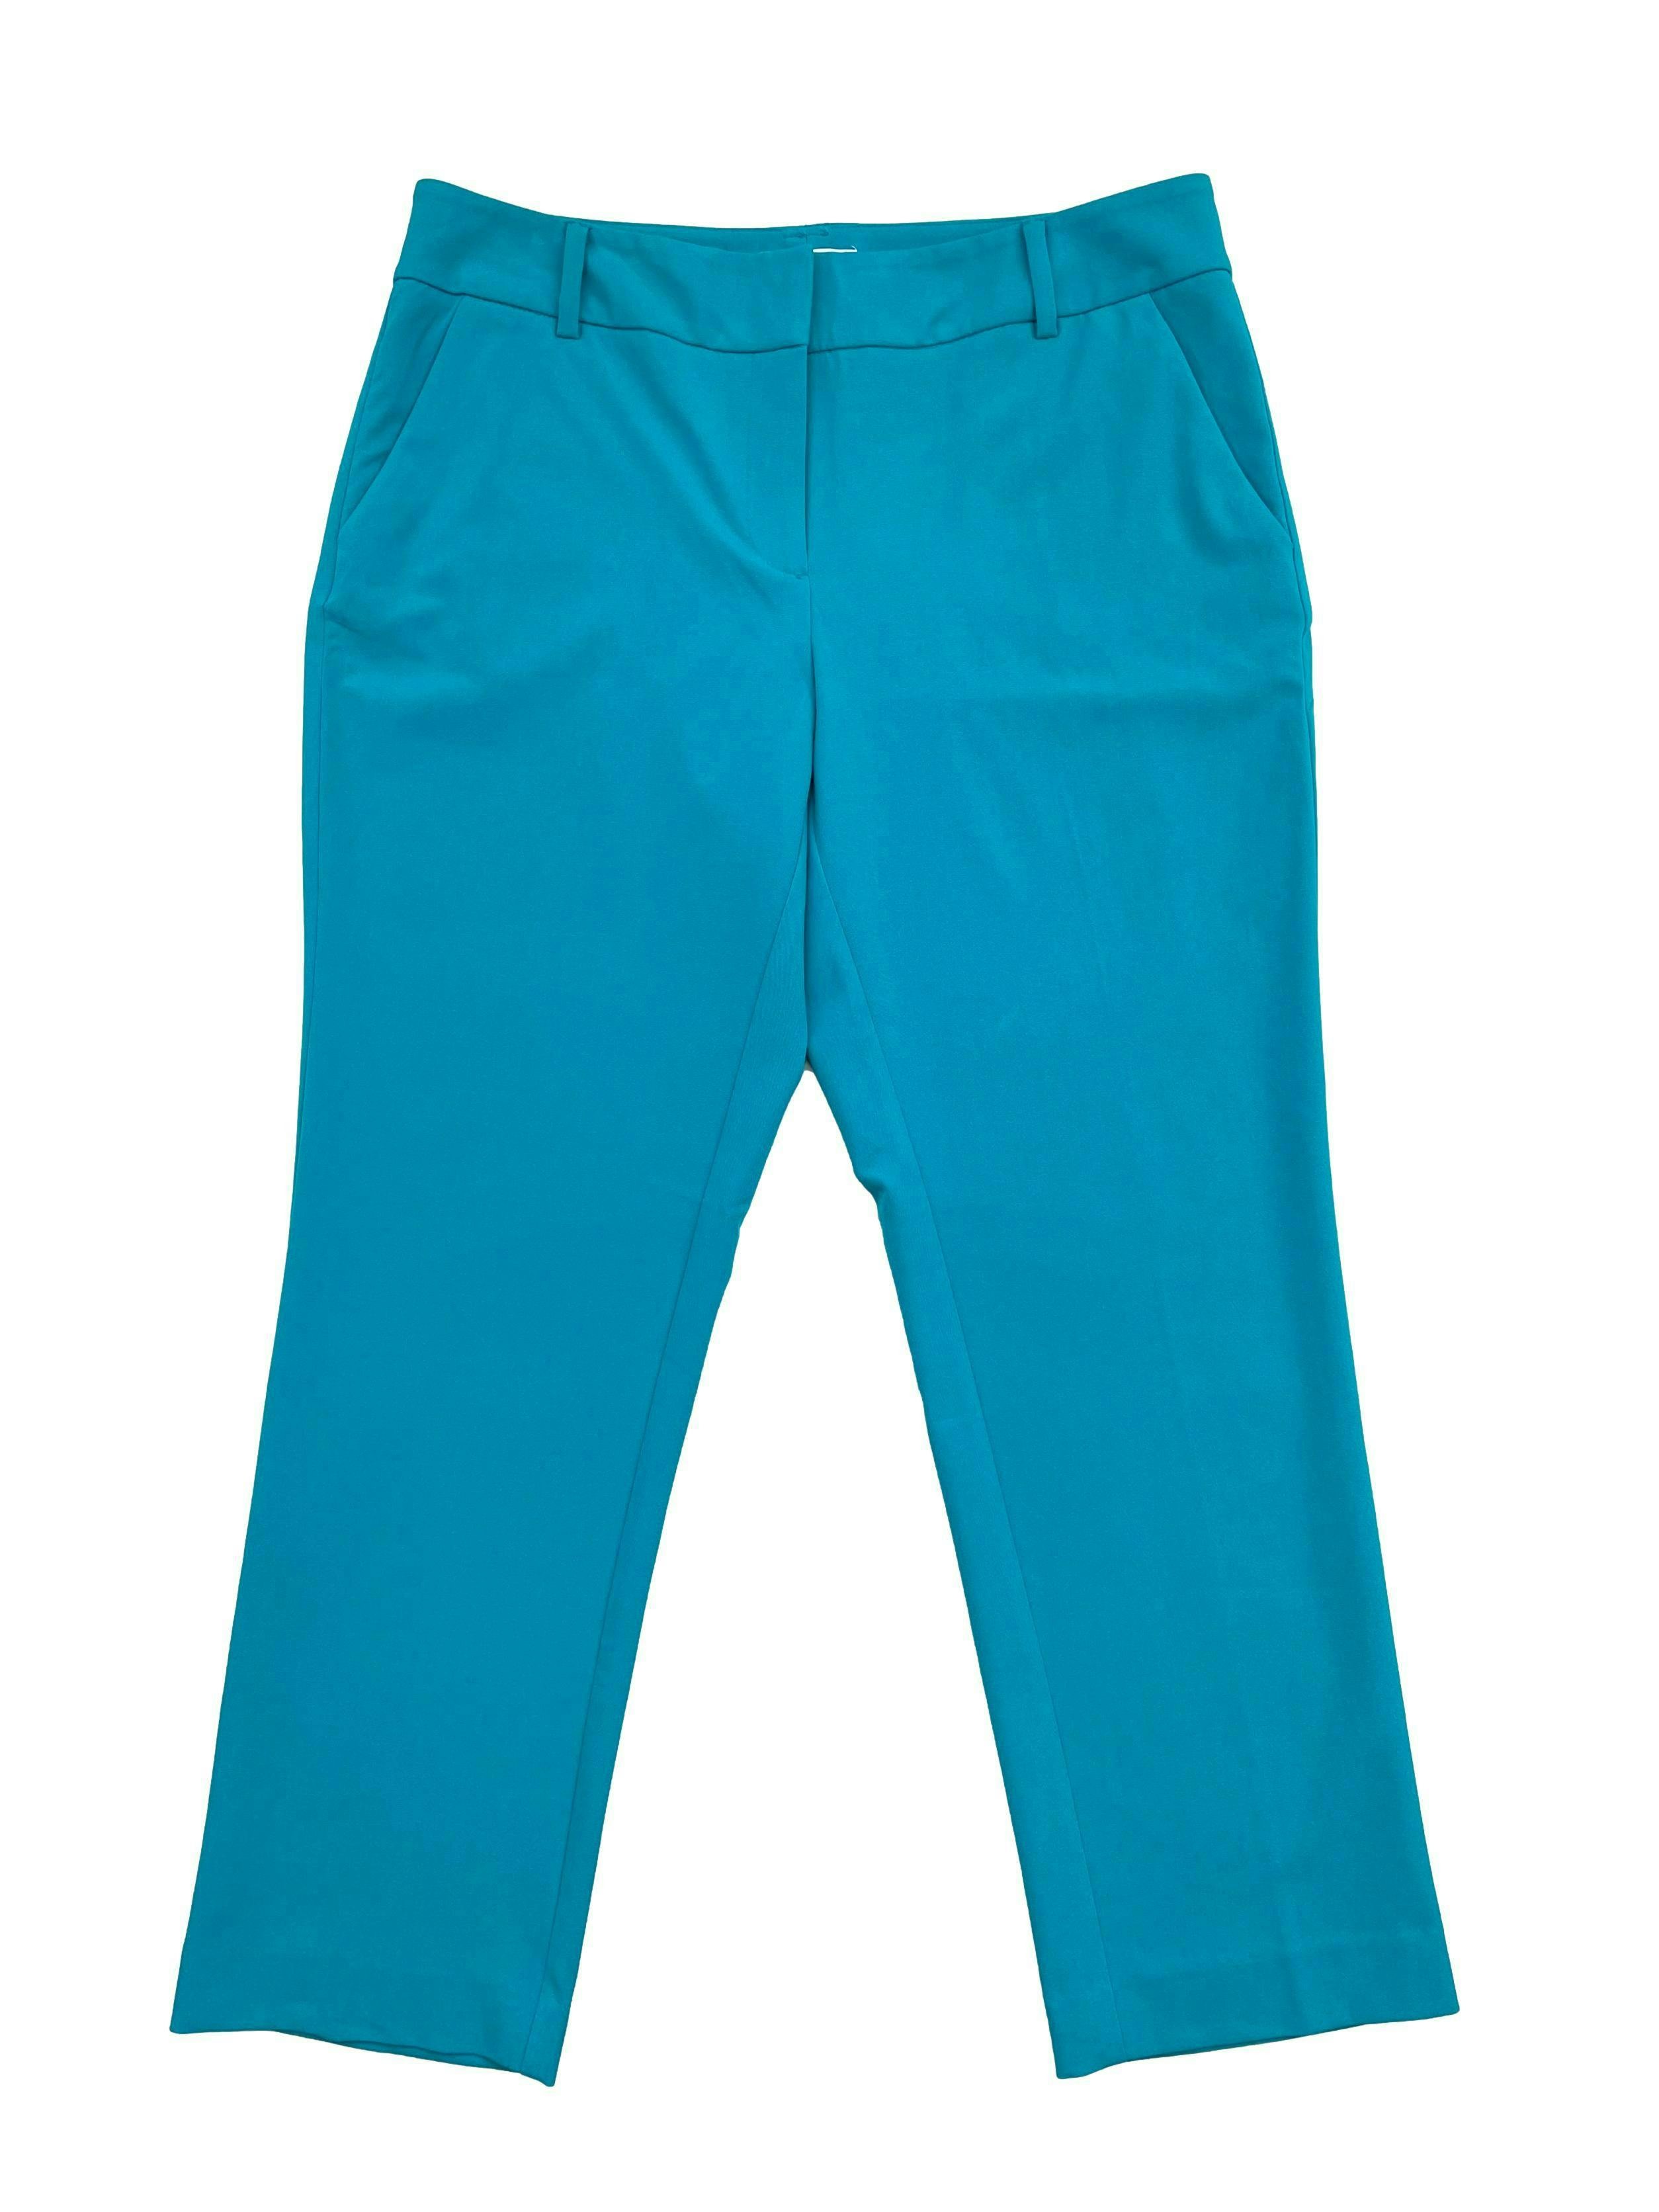 Pantalón NYC turquesa estilo formal, tiro medio y corte slim. Cintura 80cm Largo 89cm